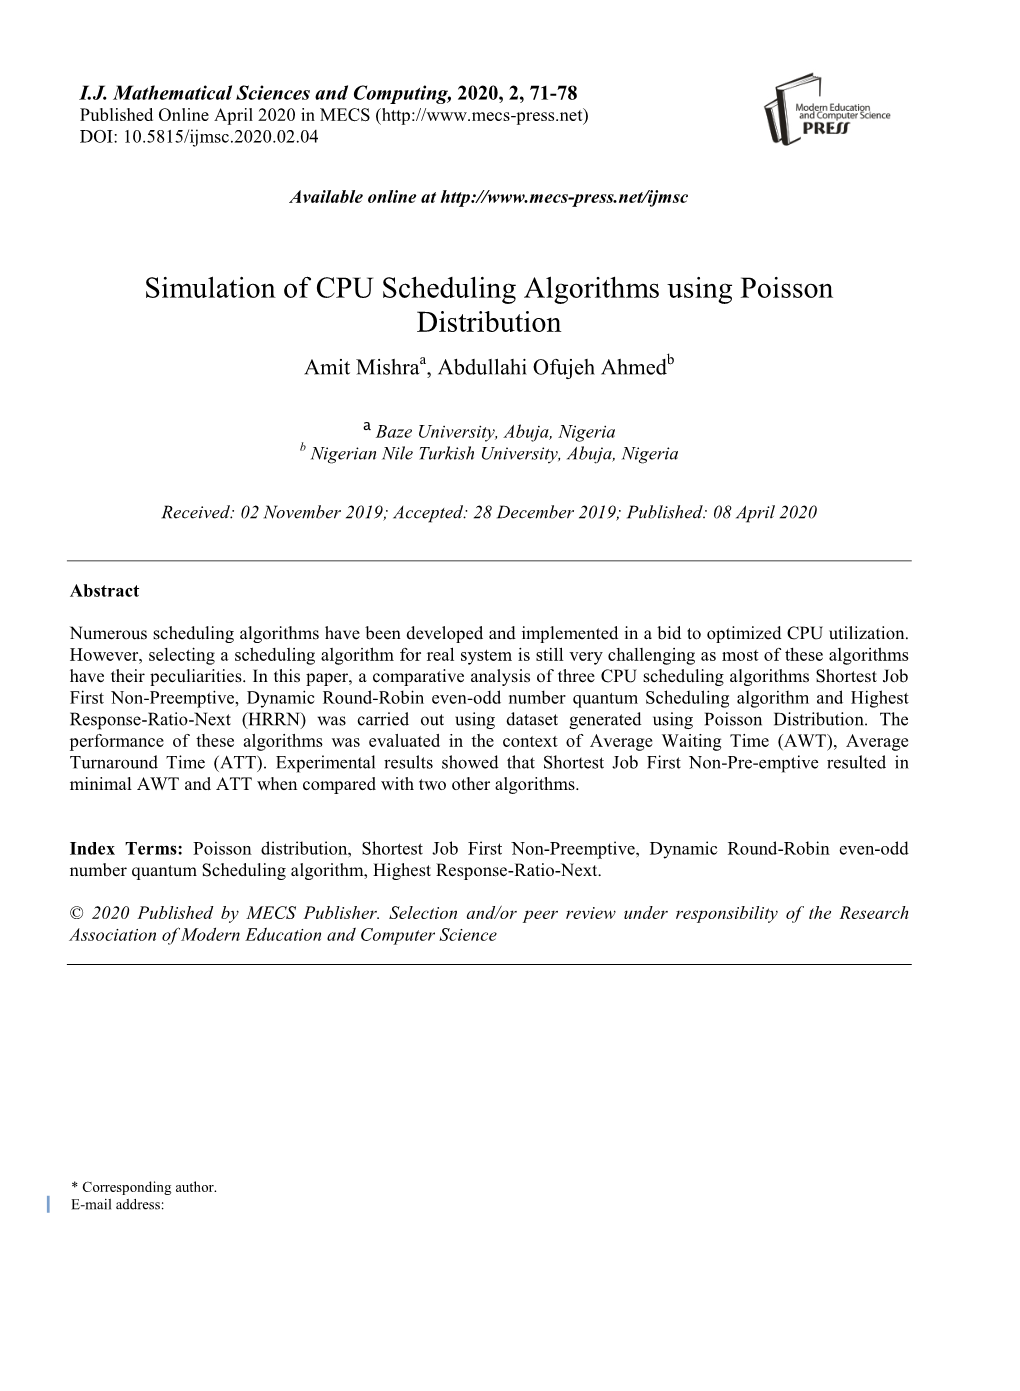 Simulation of CPU Scheduling Algorithms Using Poisson Distribution Amit Mishraa, Abdullahi Ofujeh Ahmedb